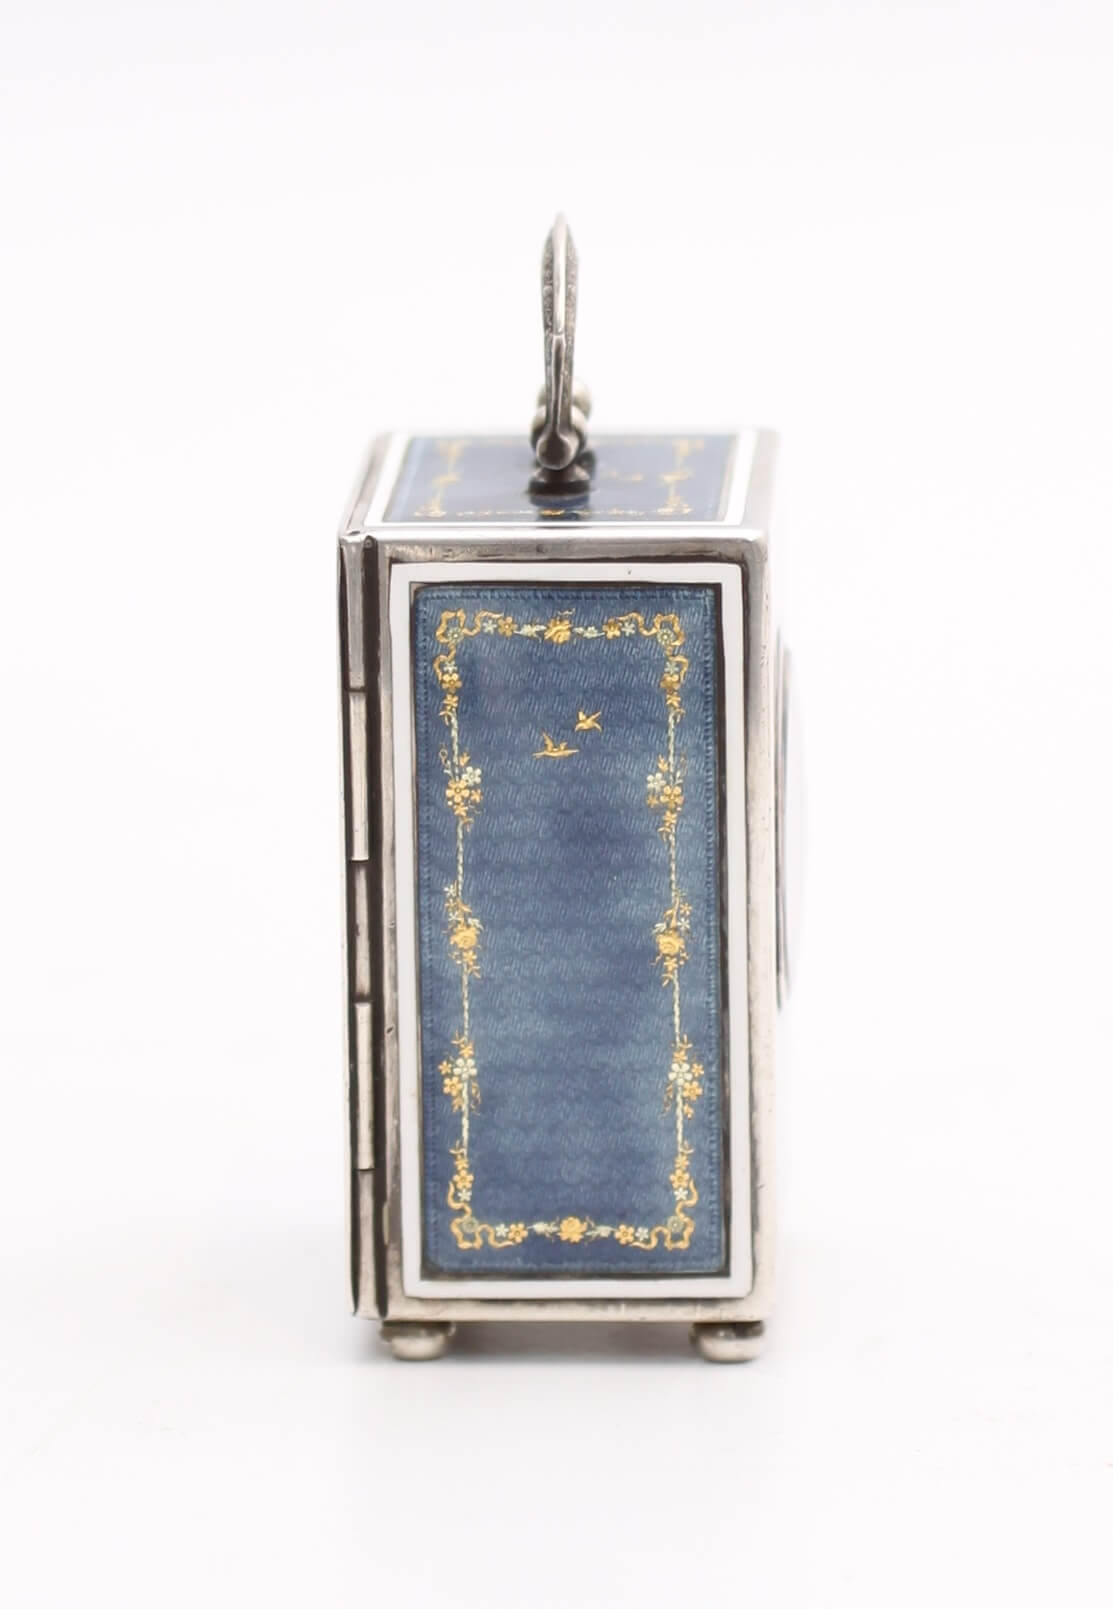 Swiss guilloche translucent enamel silver miniature travel clock